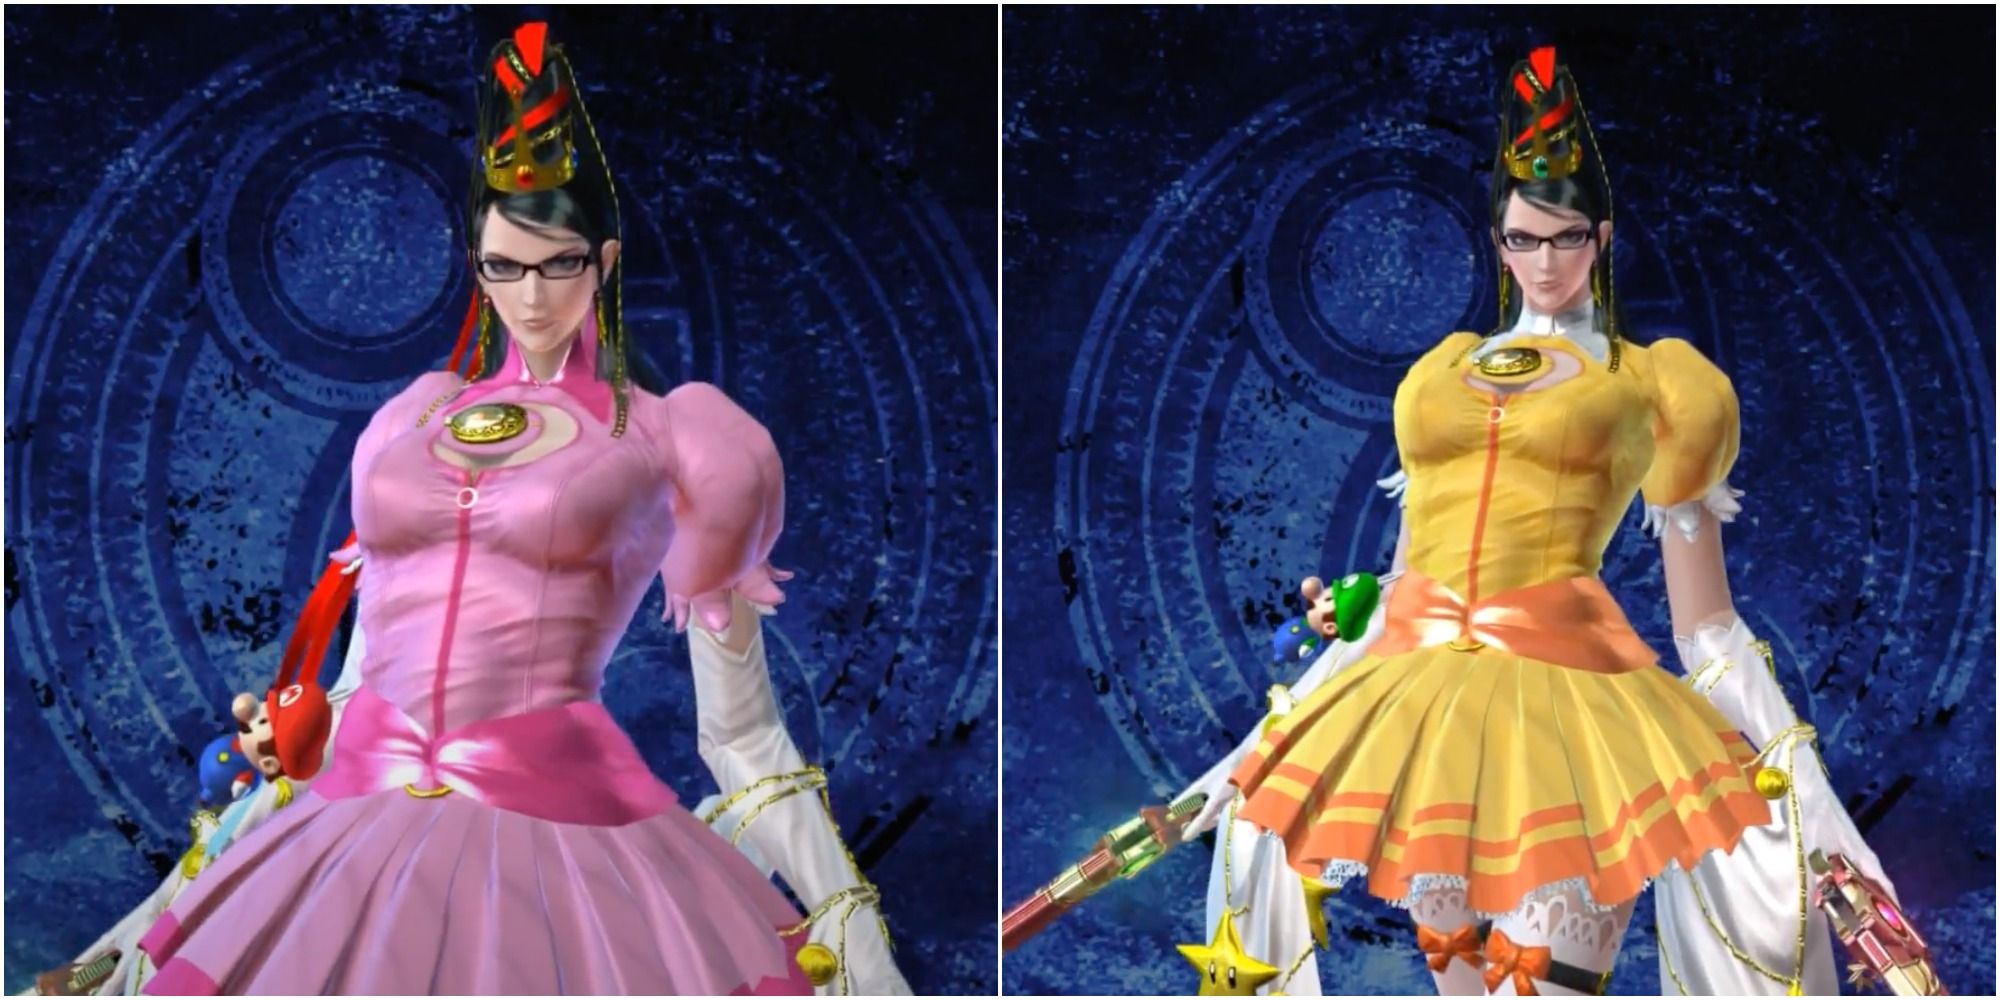 Nintendo Mushroom Princess (left) and Sarasaland Princess (right) Bayonetta 2 outfits